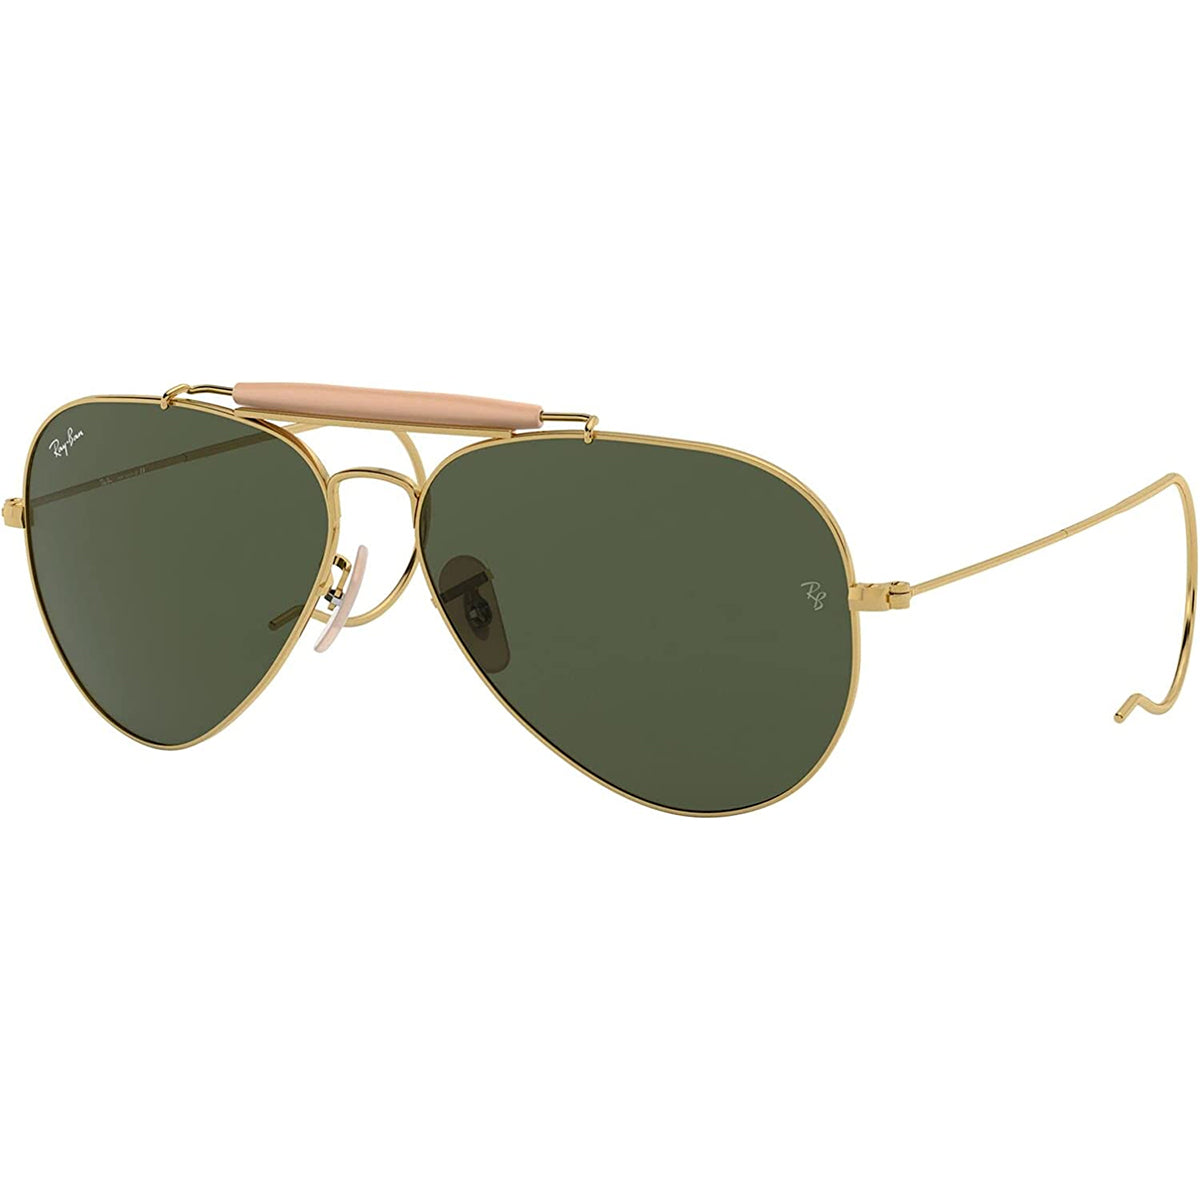 12 of the Best Luxury Sunglasses Brands